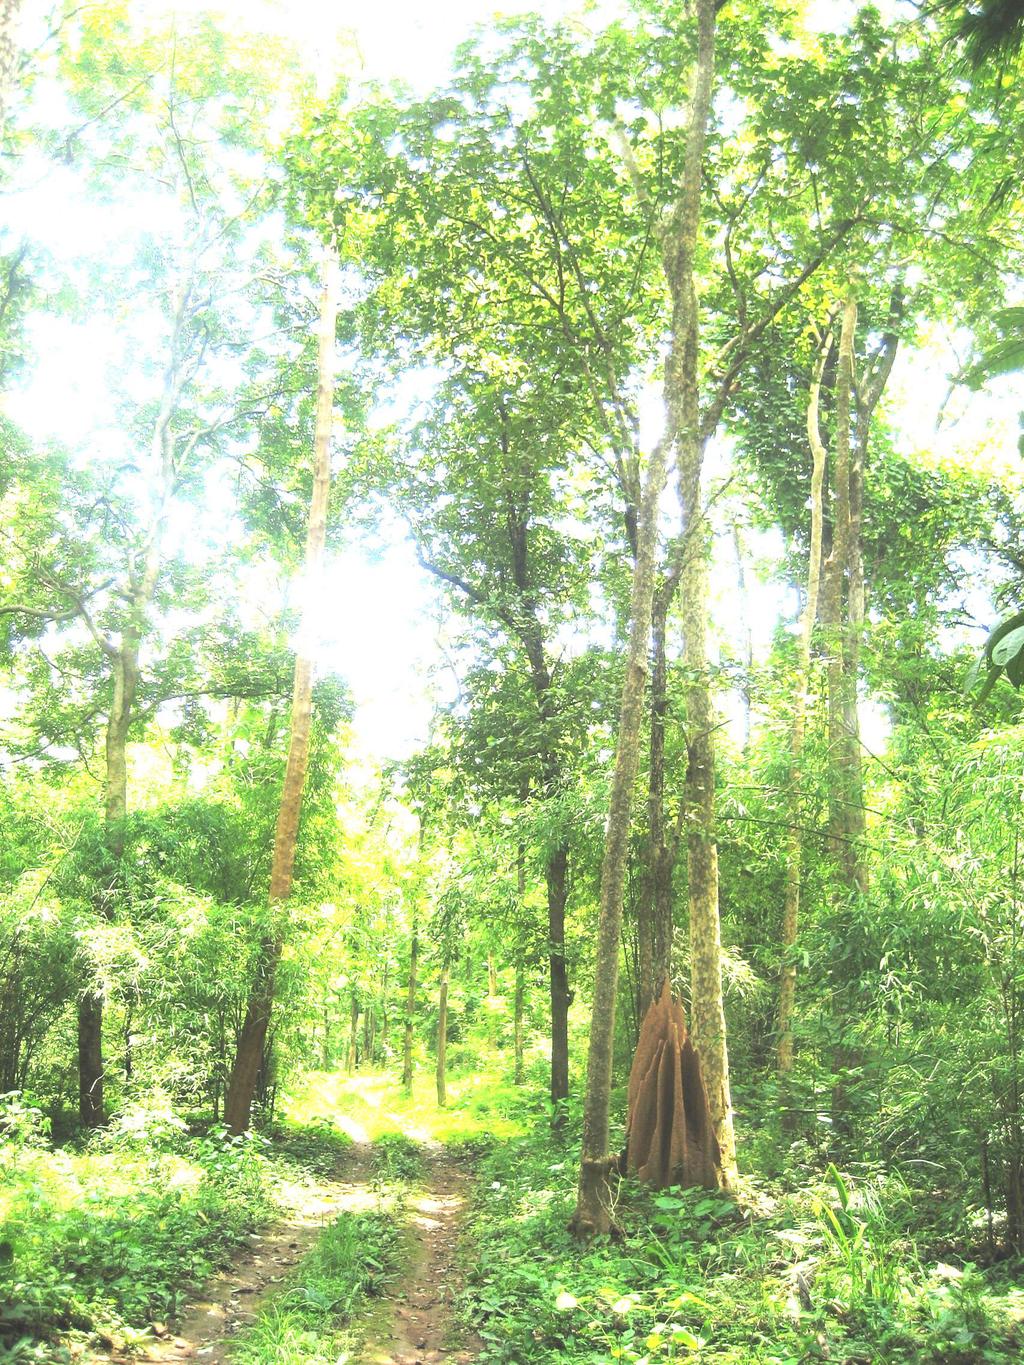 G Goovveerrnnm meen ntt ooff M Maahhaarraasshhttrraa The Working Plan of Bhandara Forest Division (Nagpur Circle)